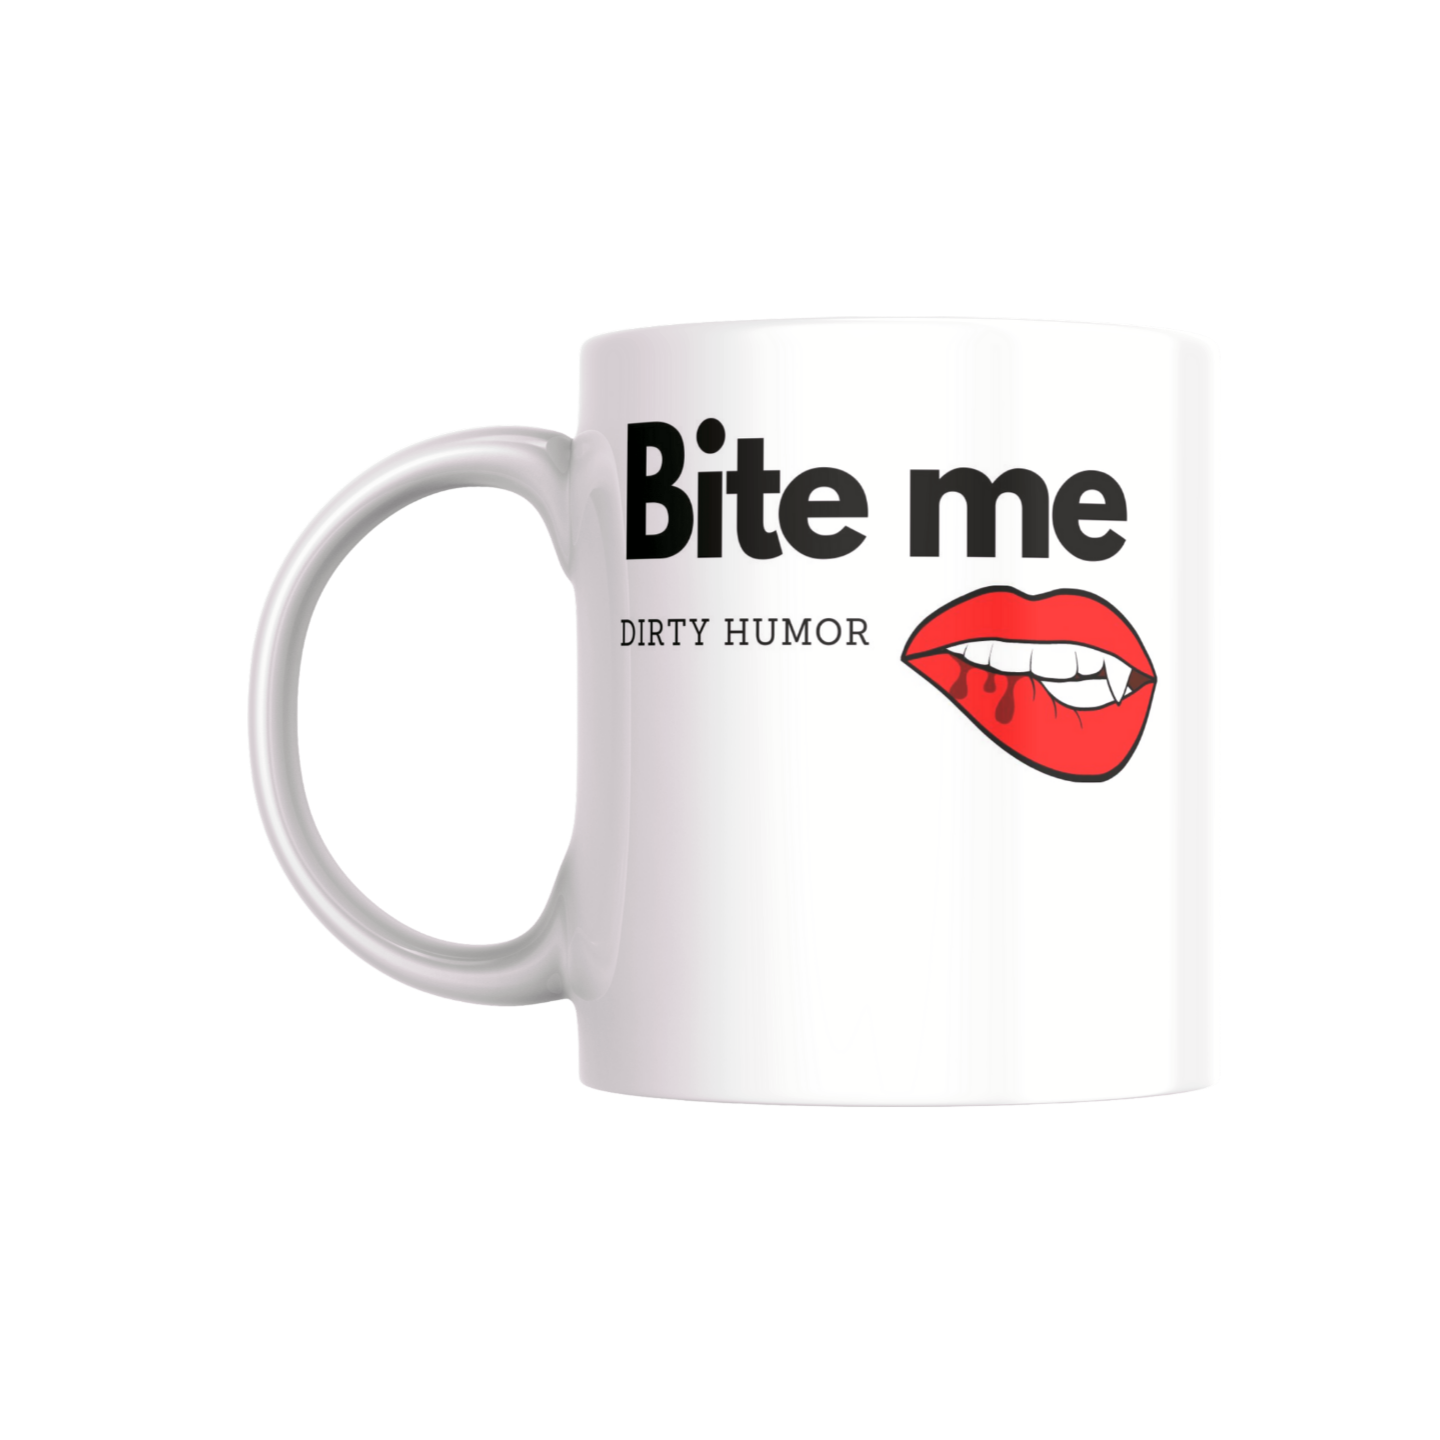 Bite me